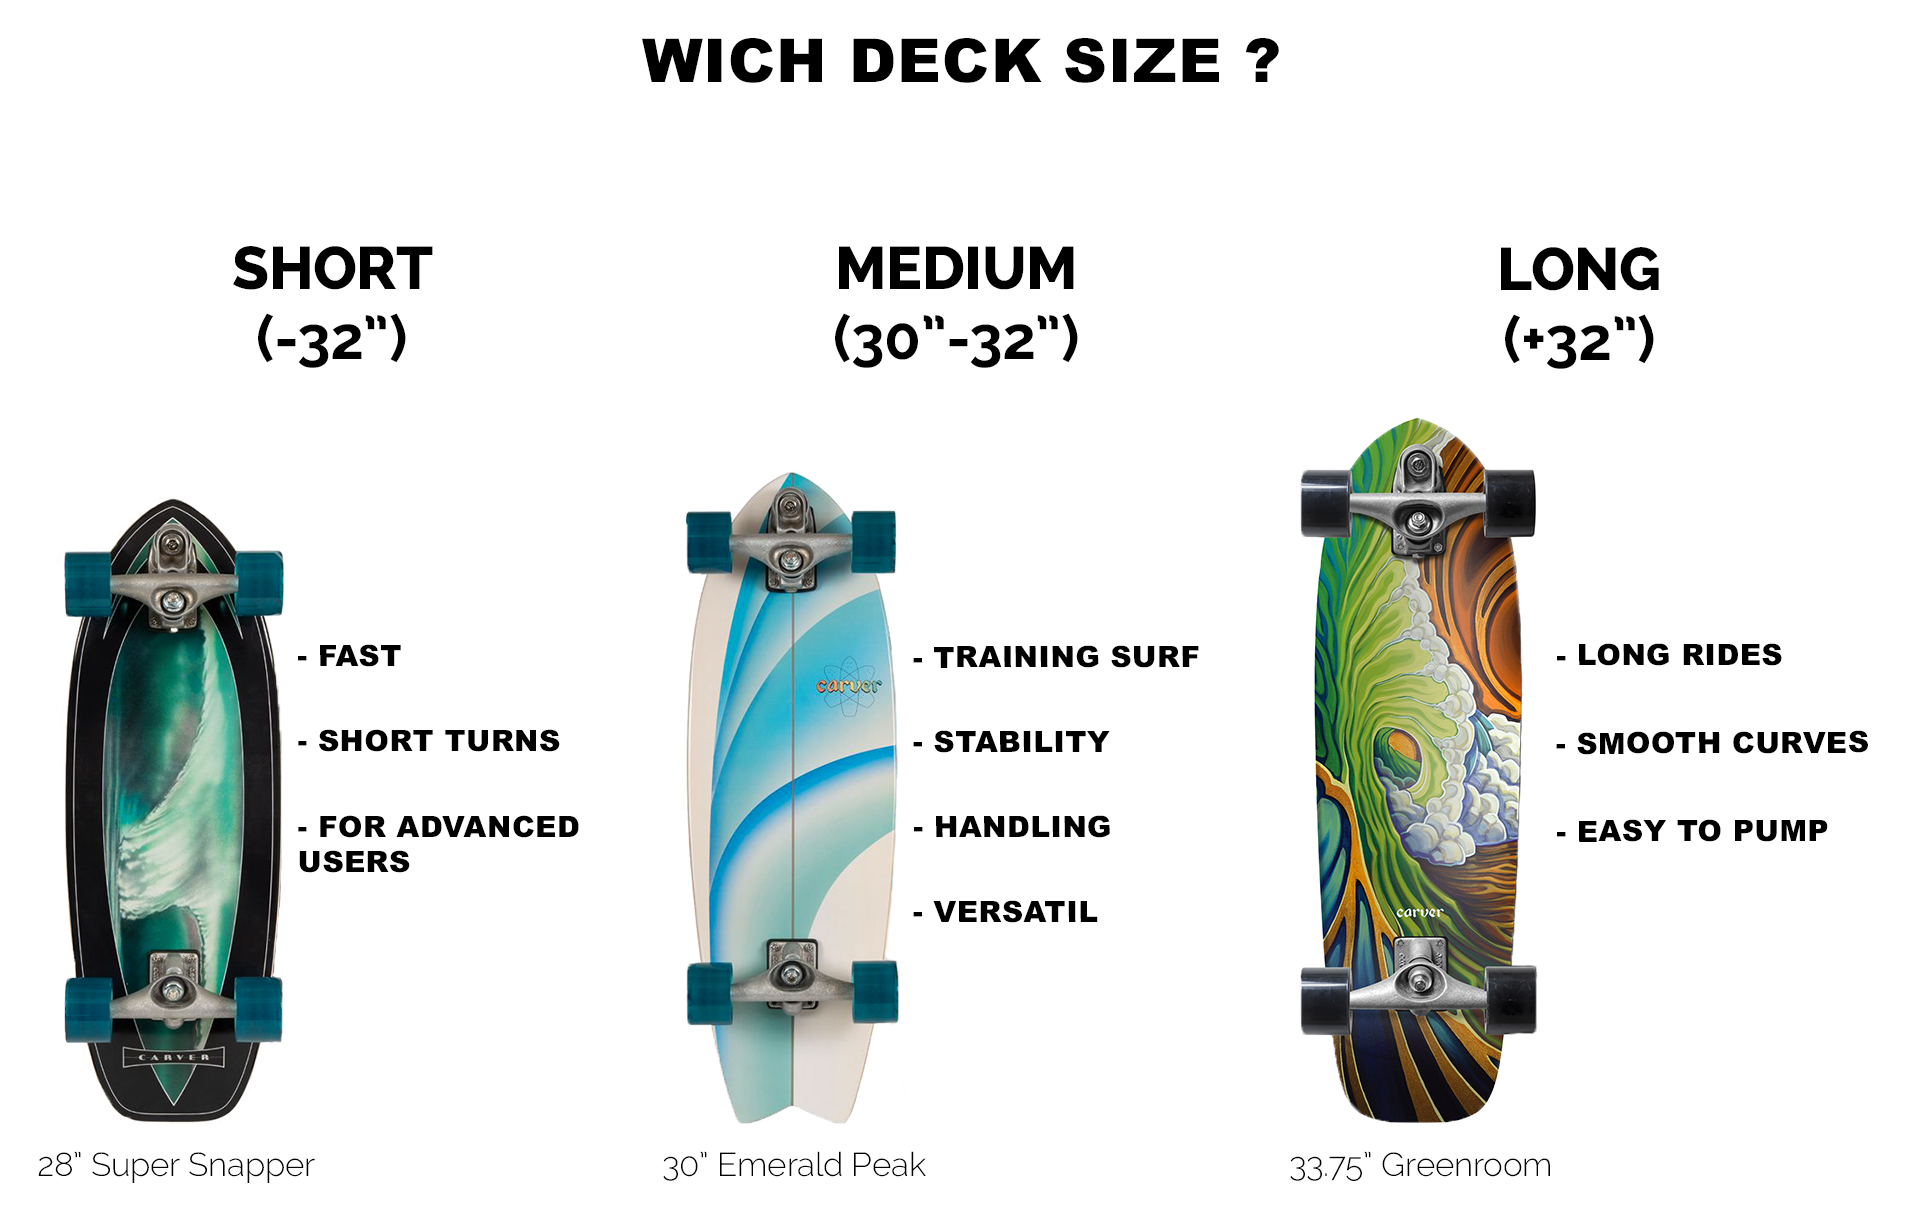 Which deck size